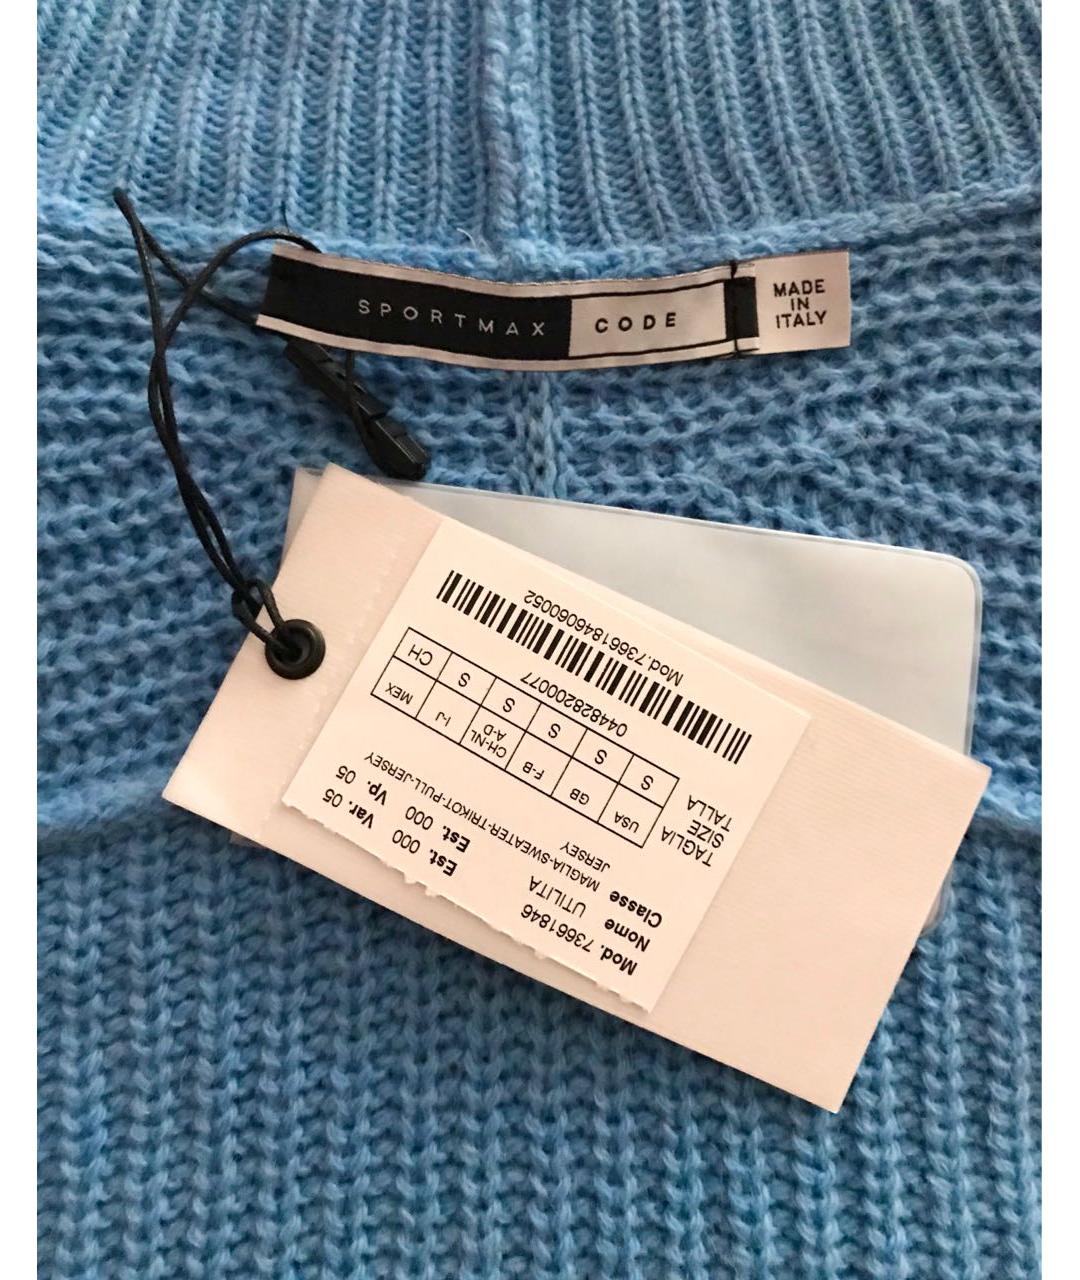 SPORT MAX CODE Голубой шерстяной джемпер / свитер, фото 7